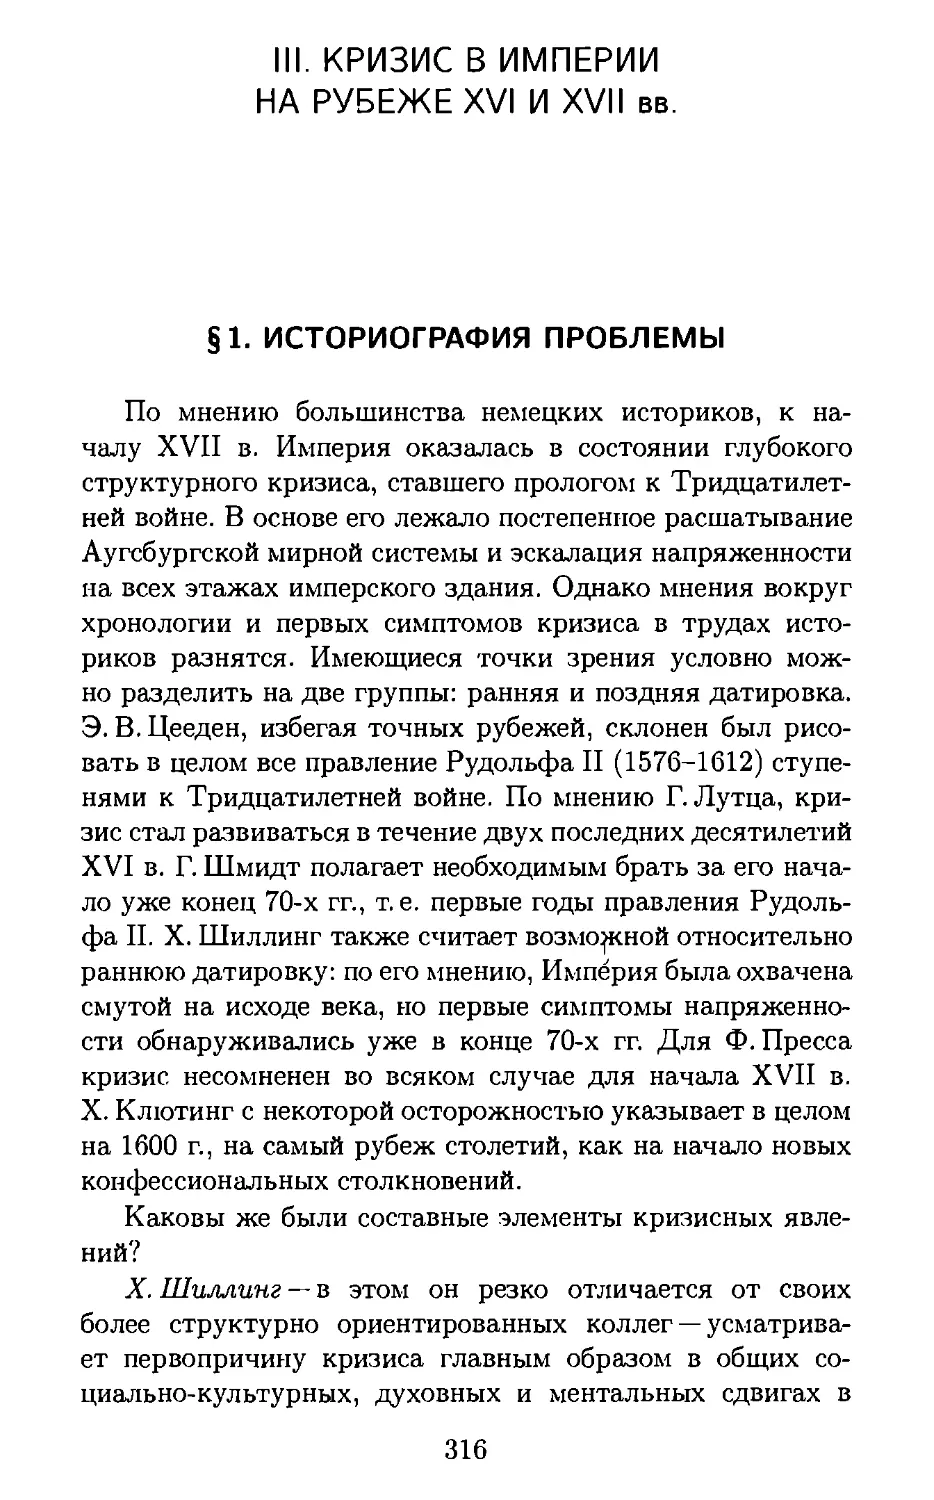 III. КРИЗИС В ИМПЕРИИ НА РУБЕЖЕ XVI И XVII вв.